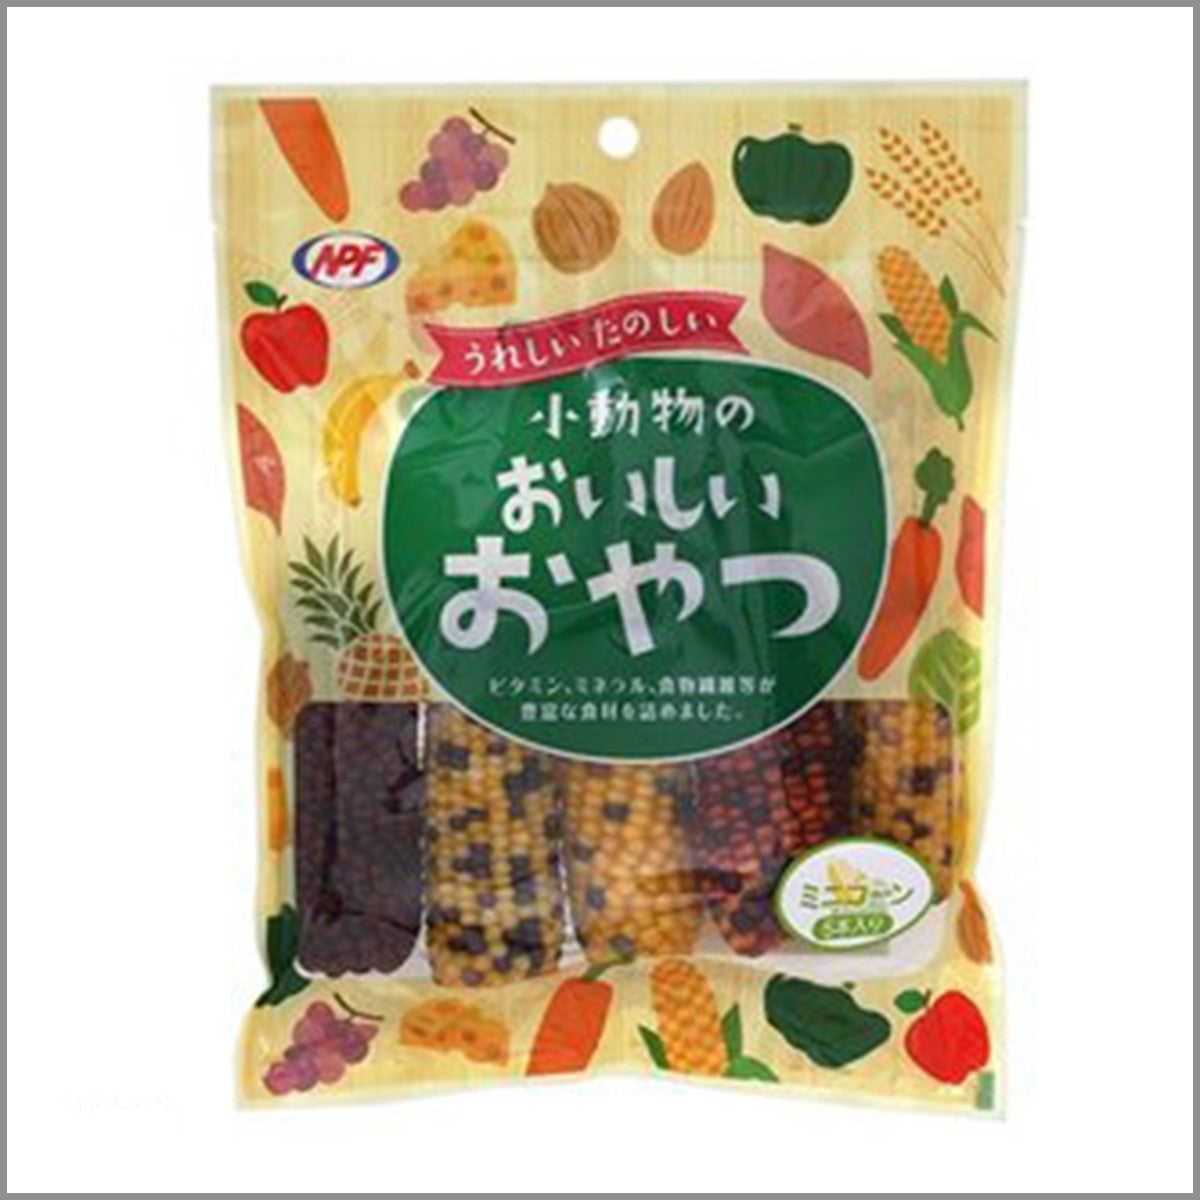 NPF Small animal delicious snack mini corn_小動物零食迷你栗米